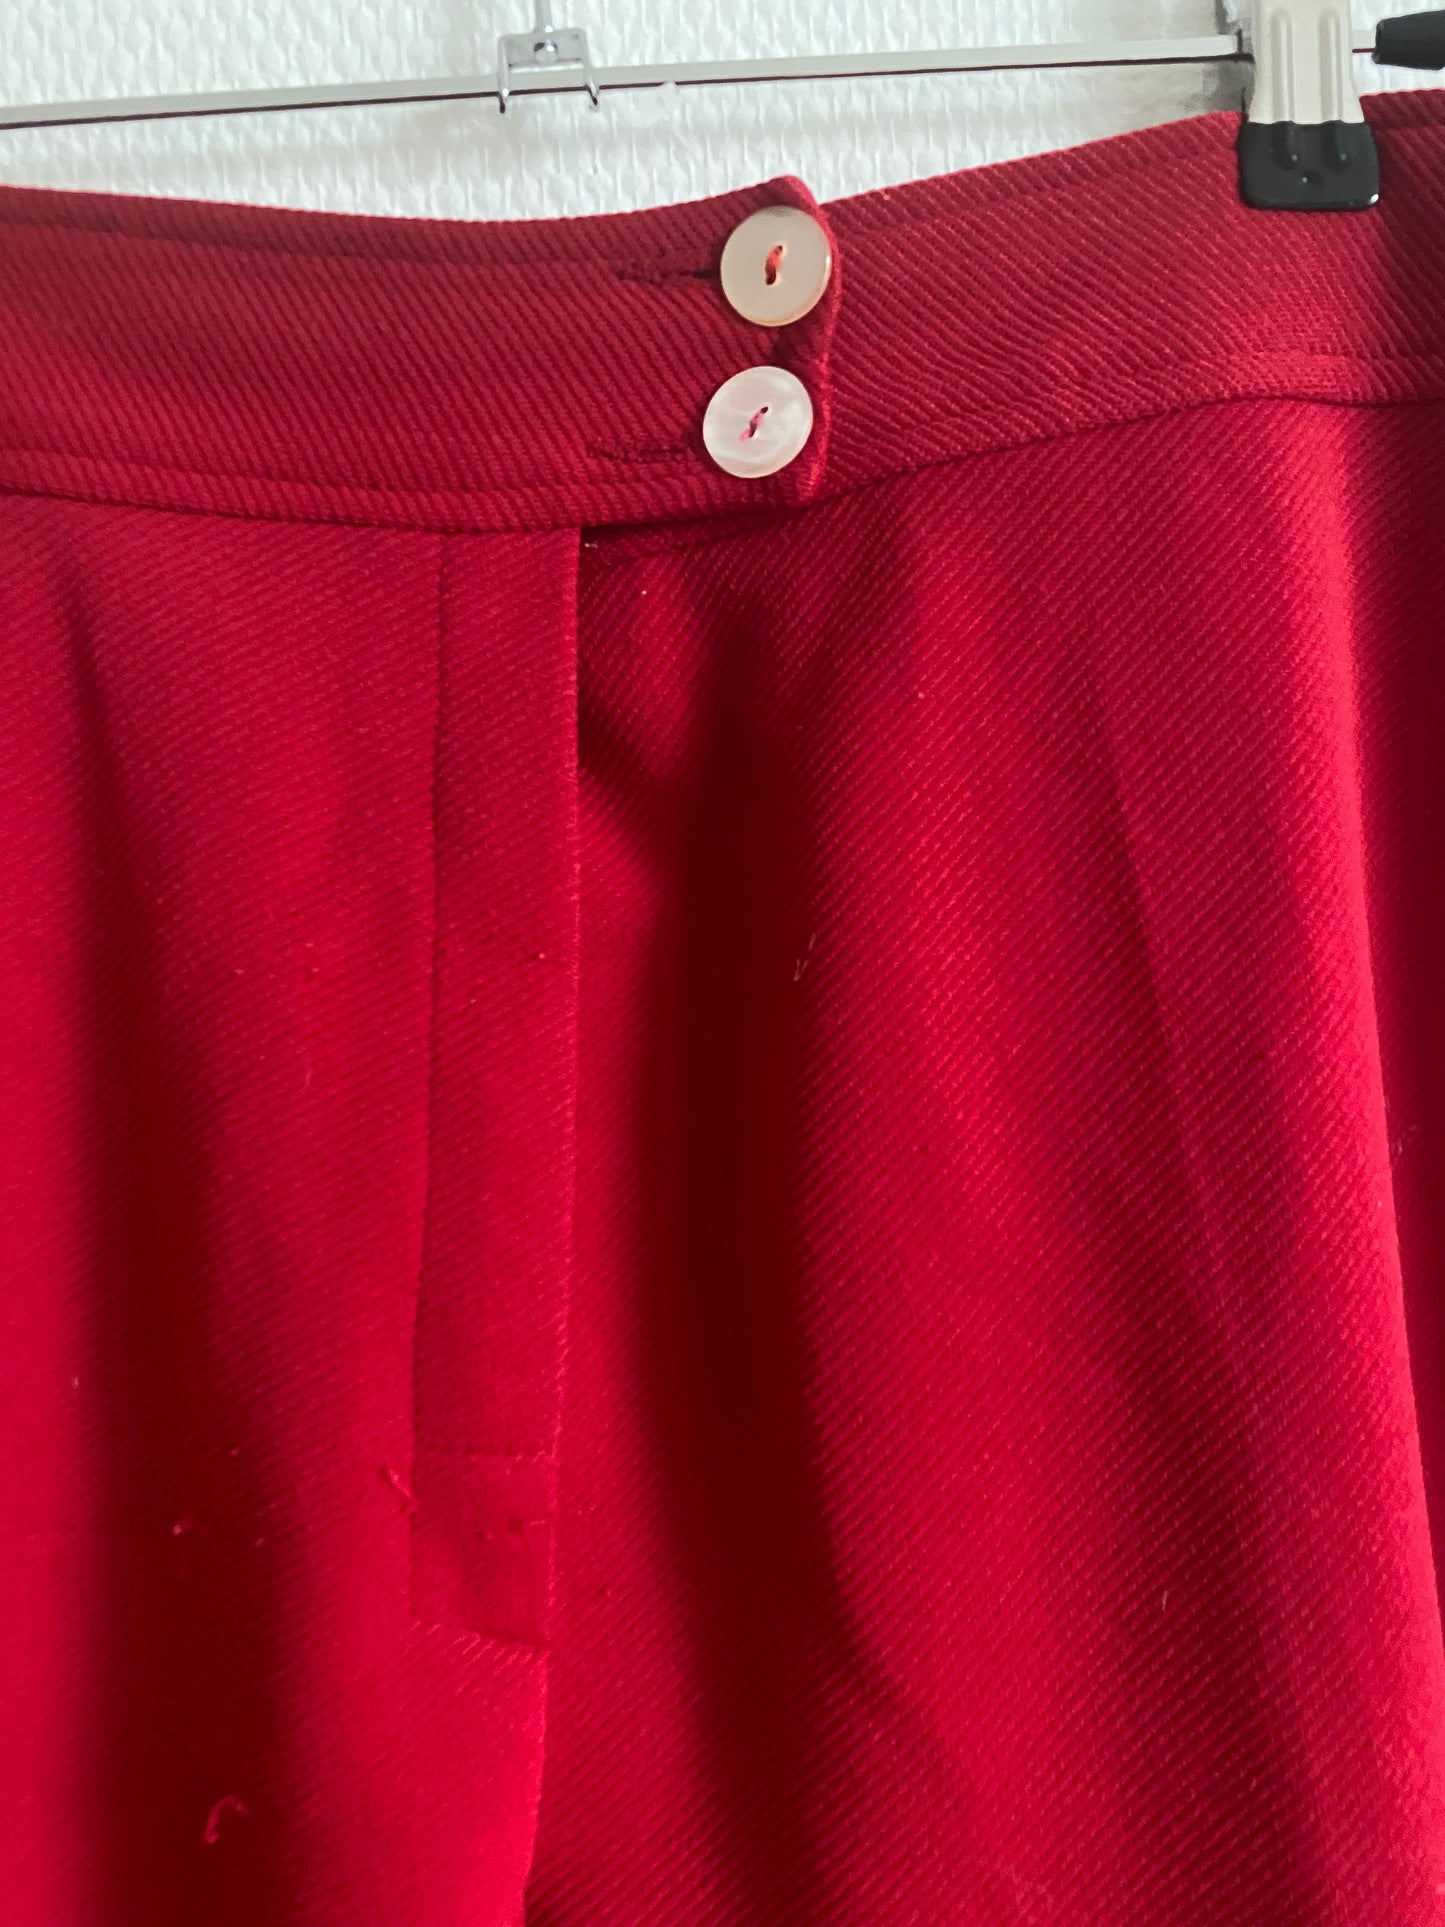 Pantalon rouge 70s